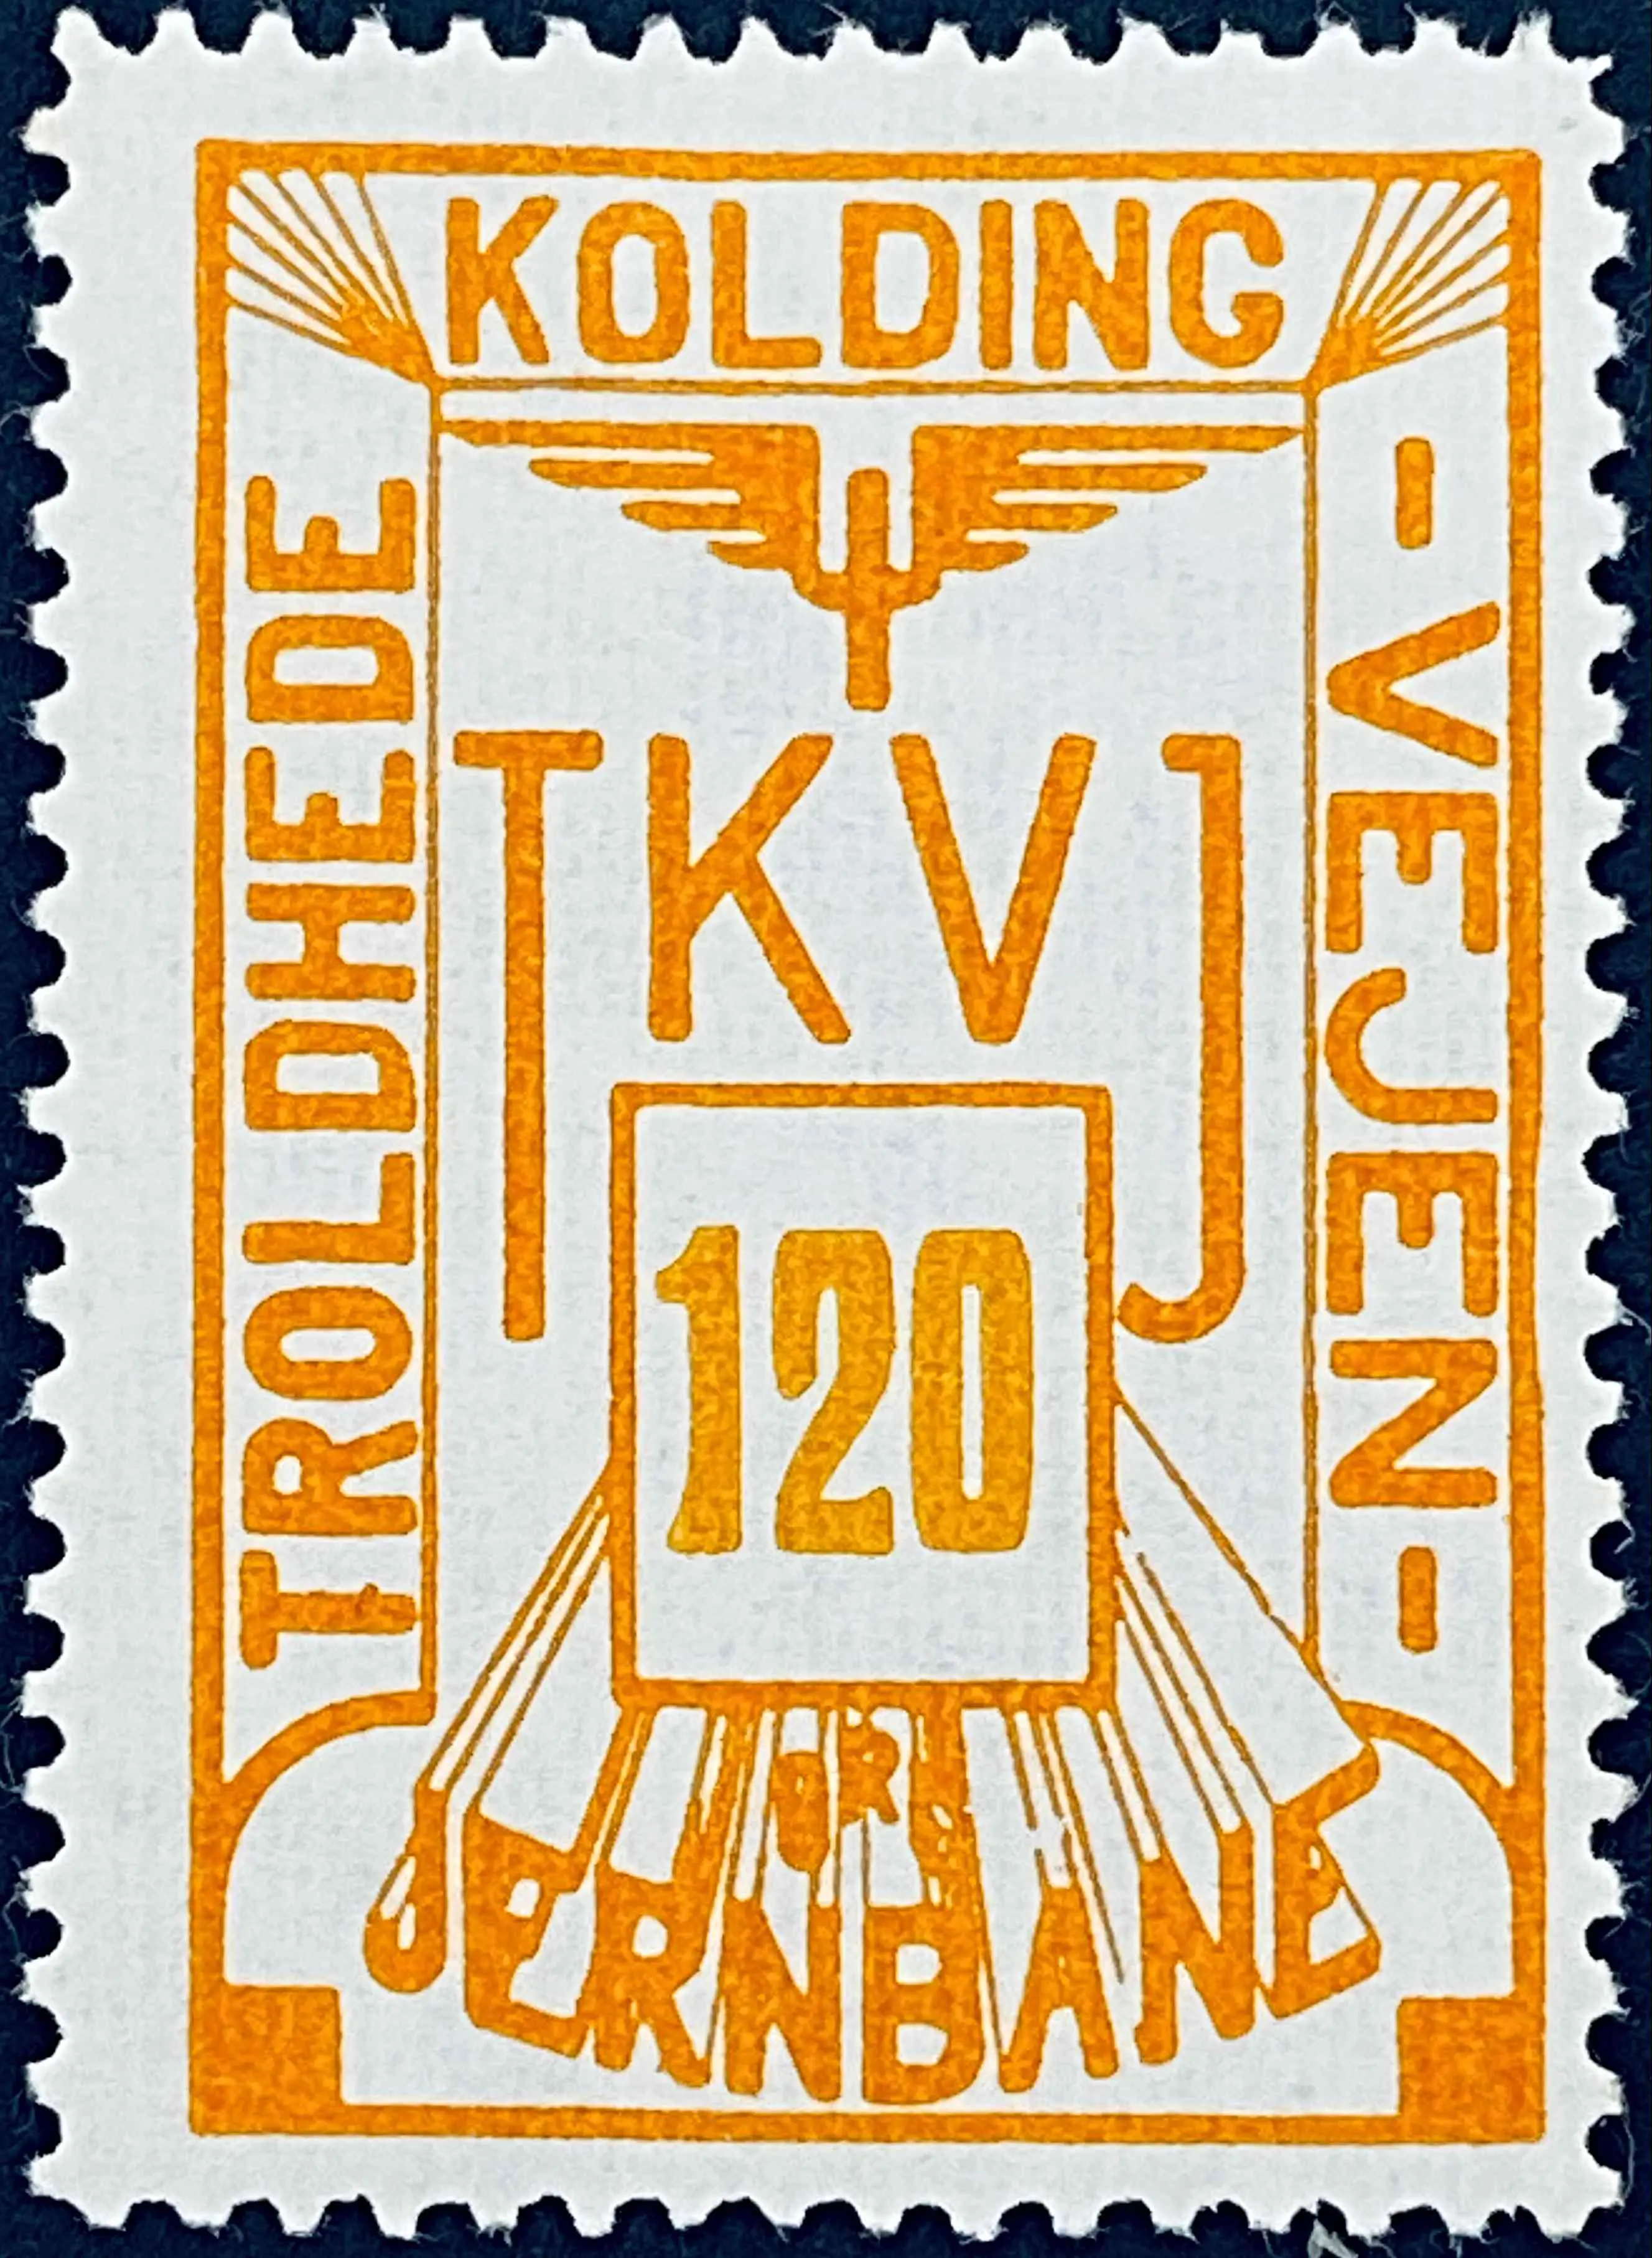 TKVJ 74 - 120 Øre - Orange.